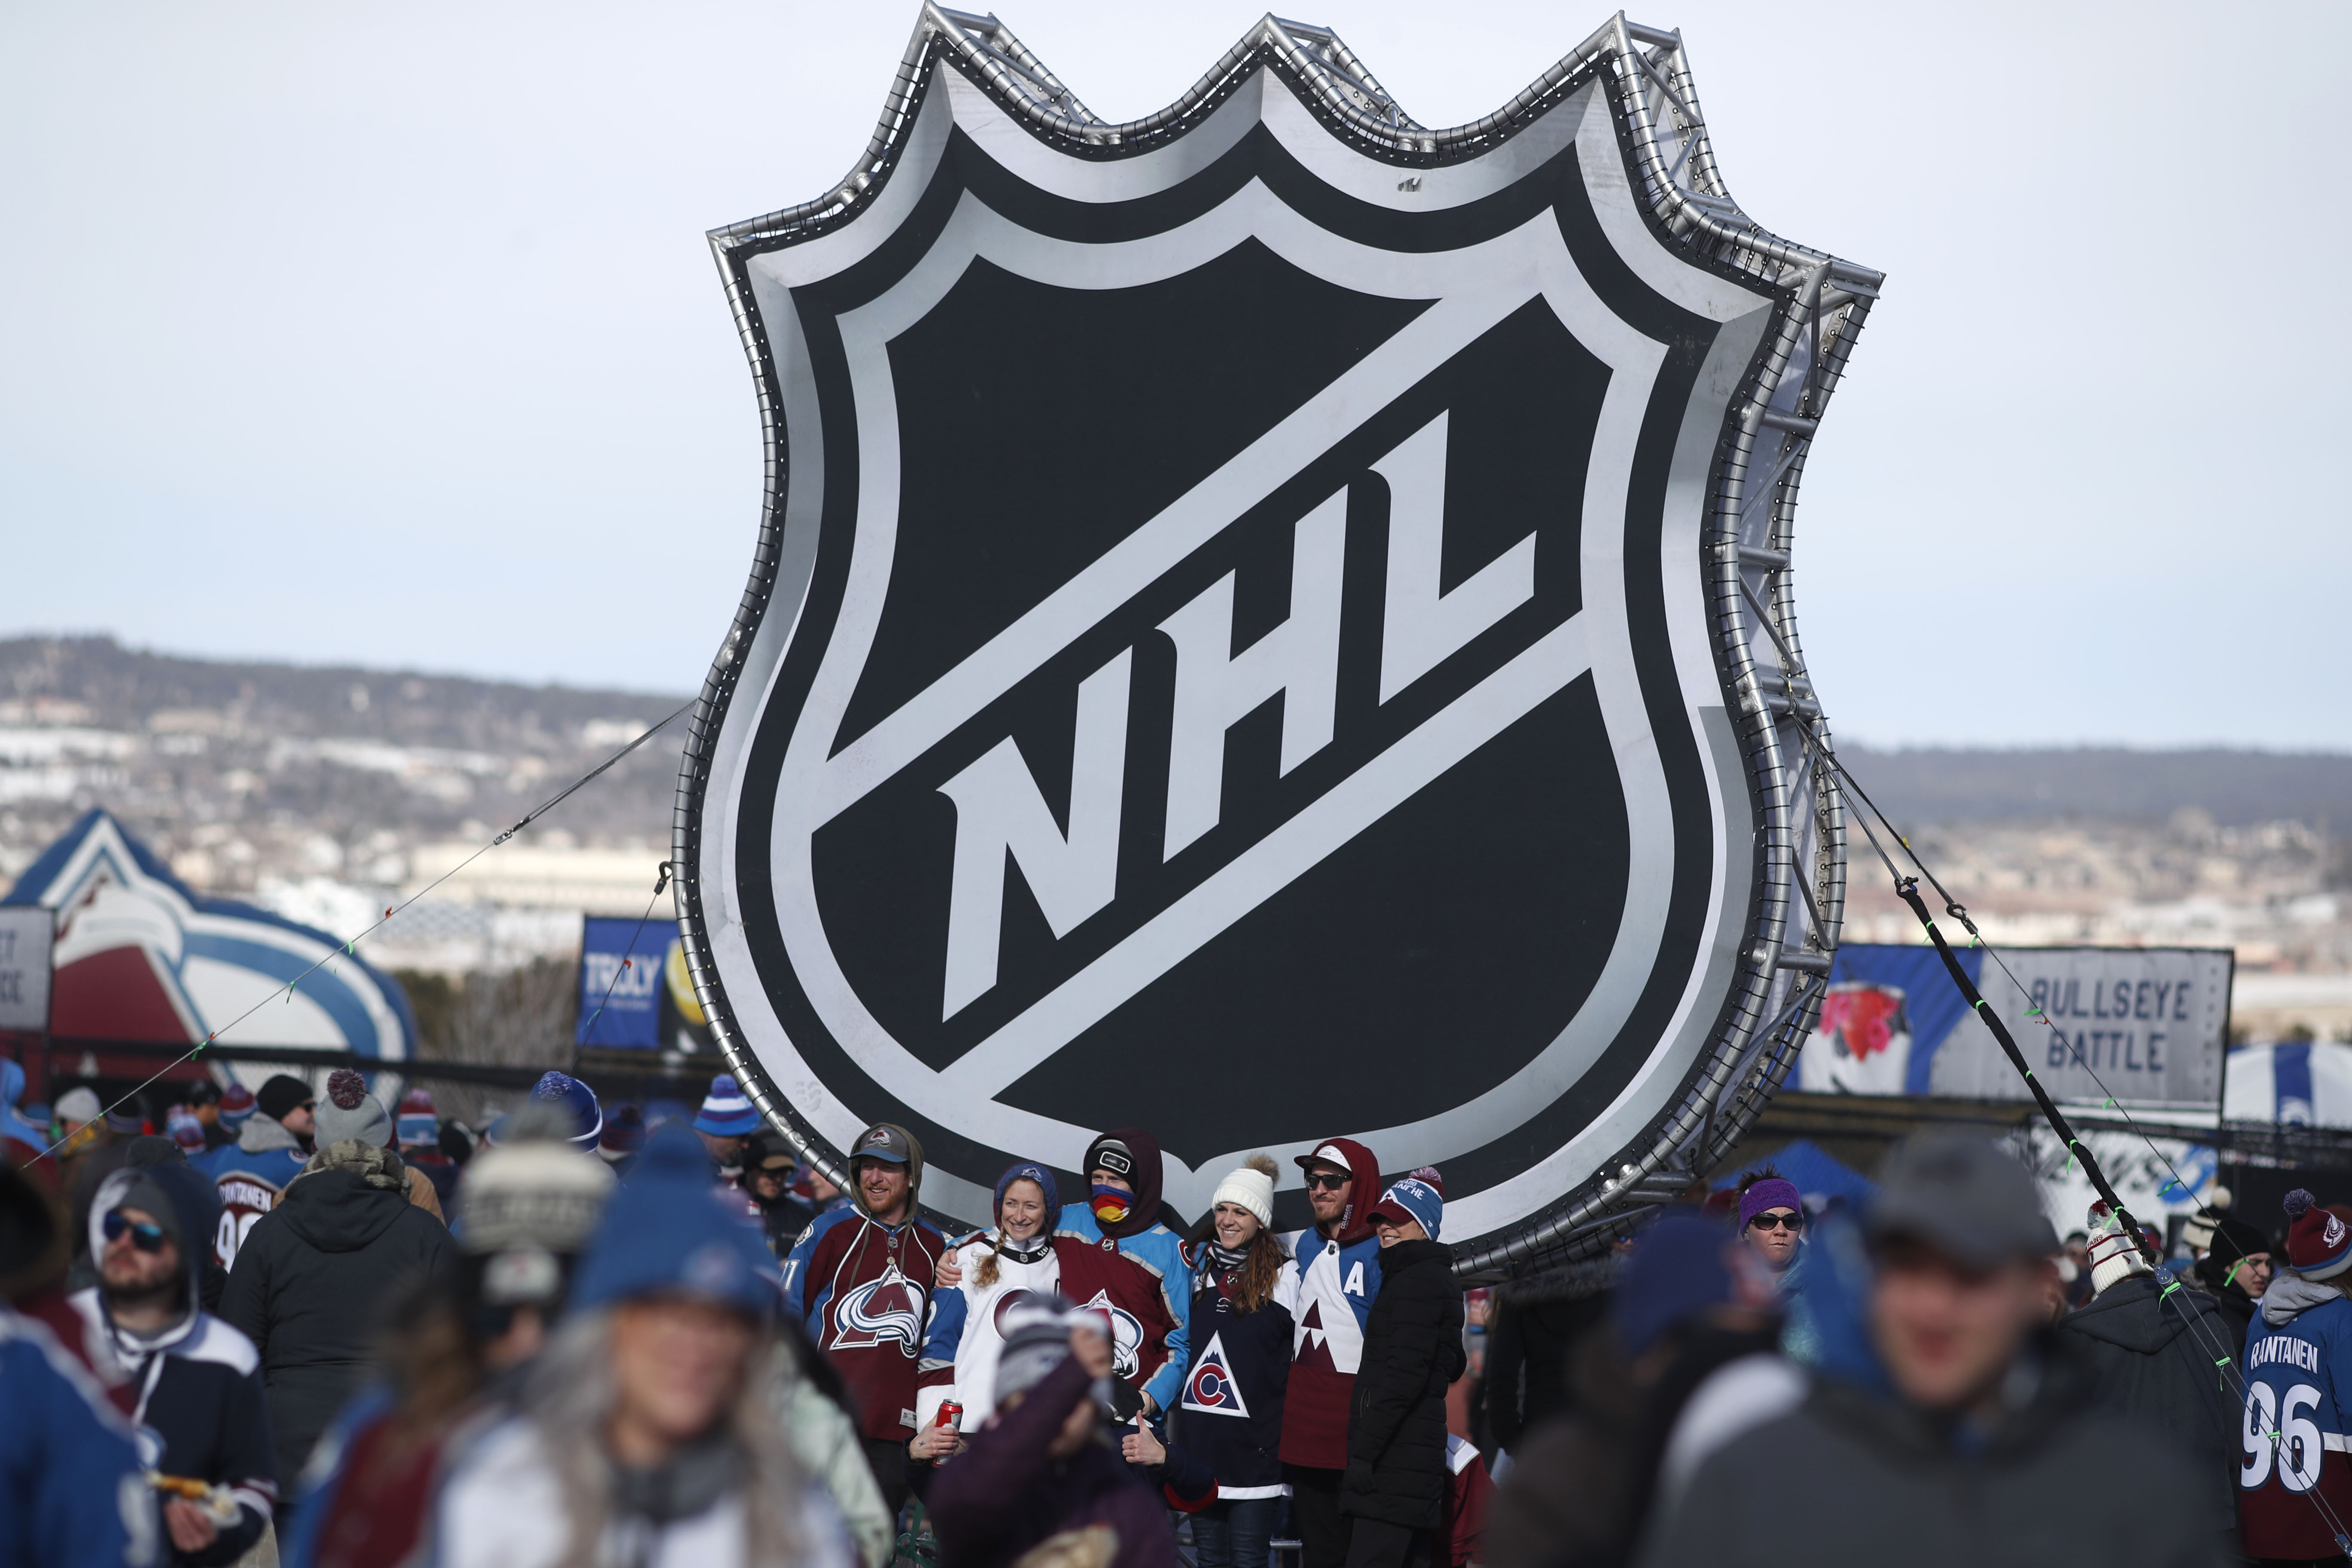 NHL, ESPN reach 7-year TV, streaming rights deal